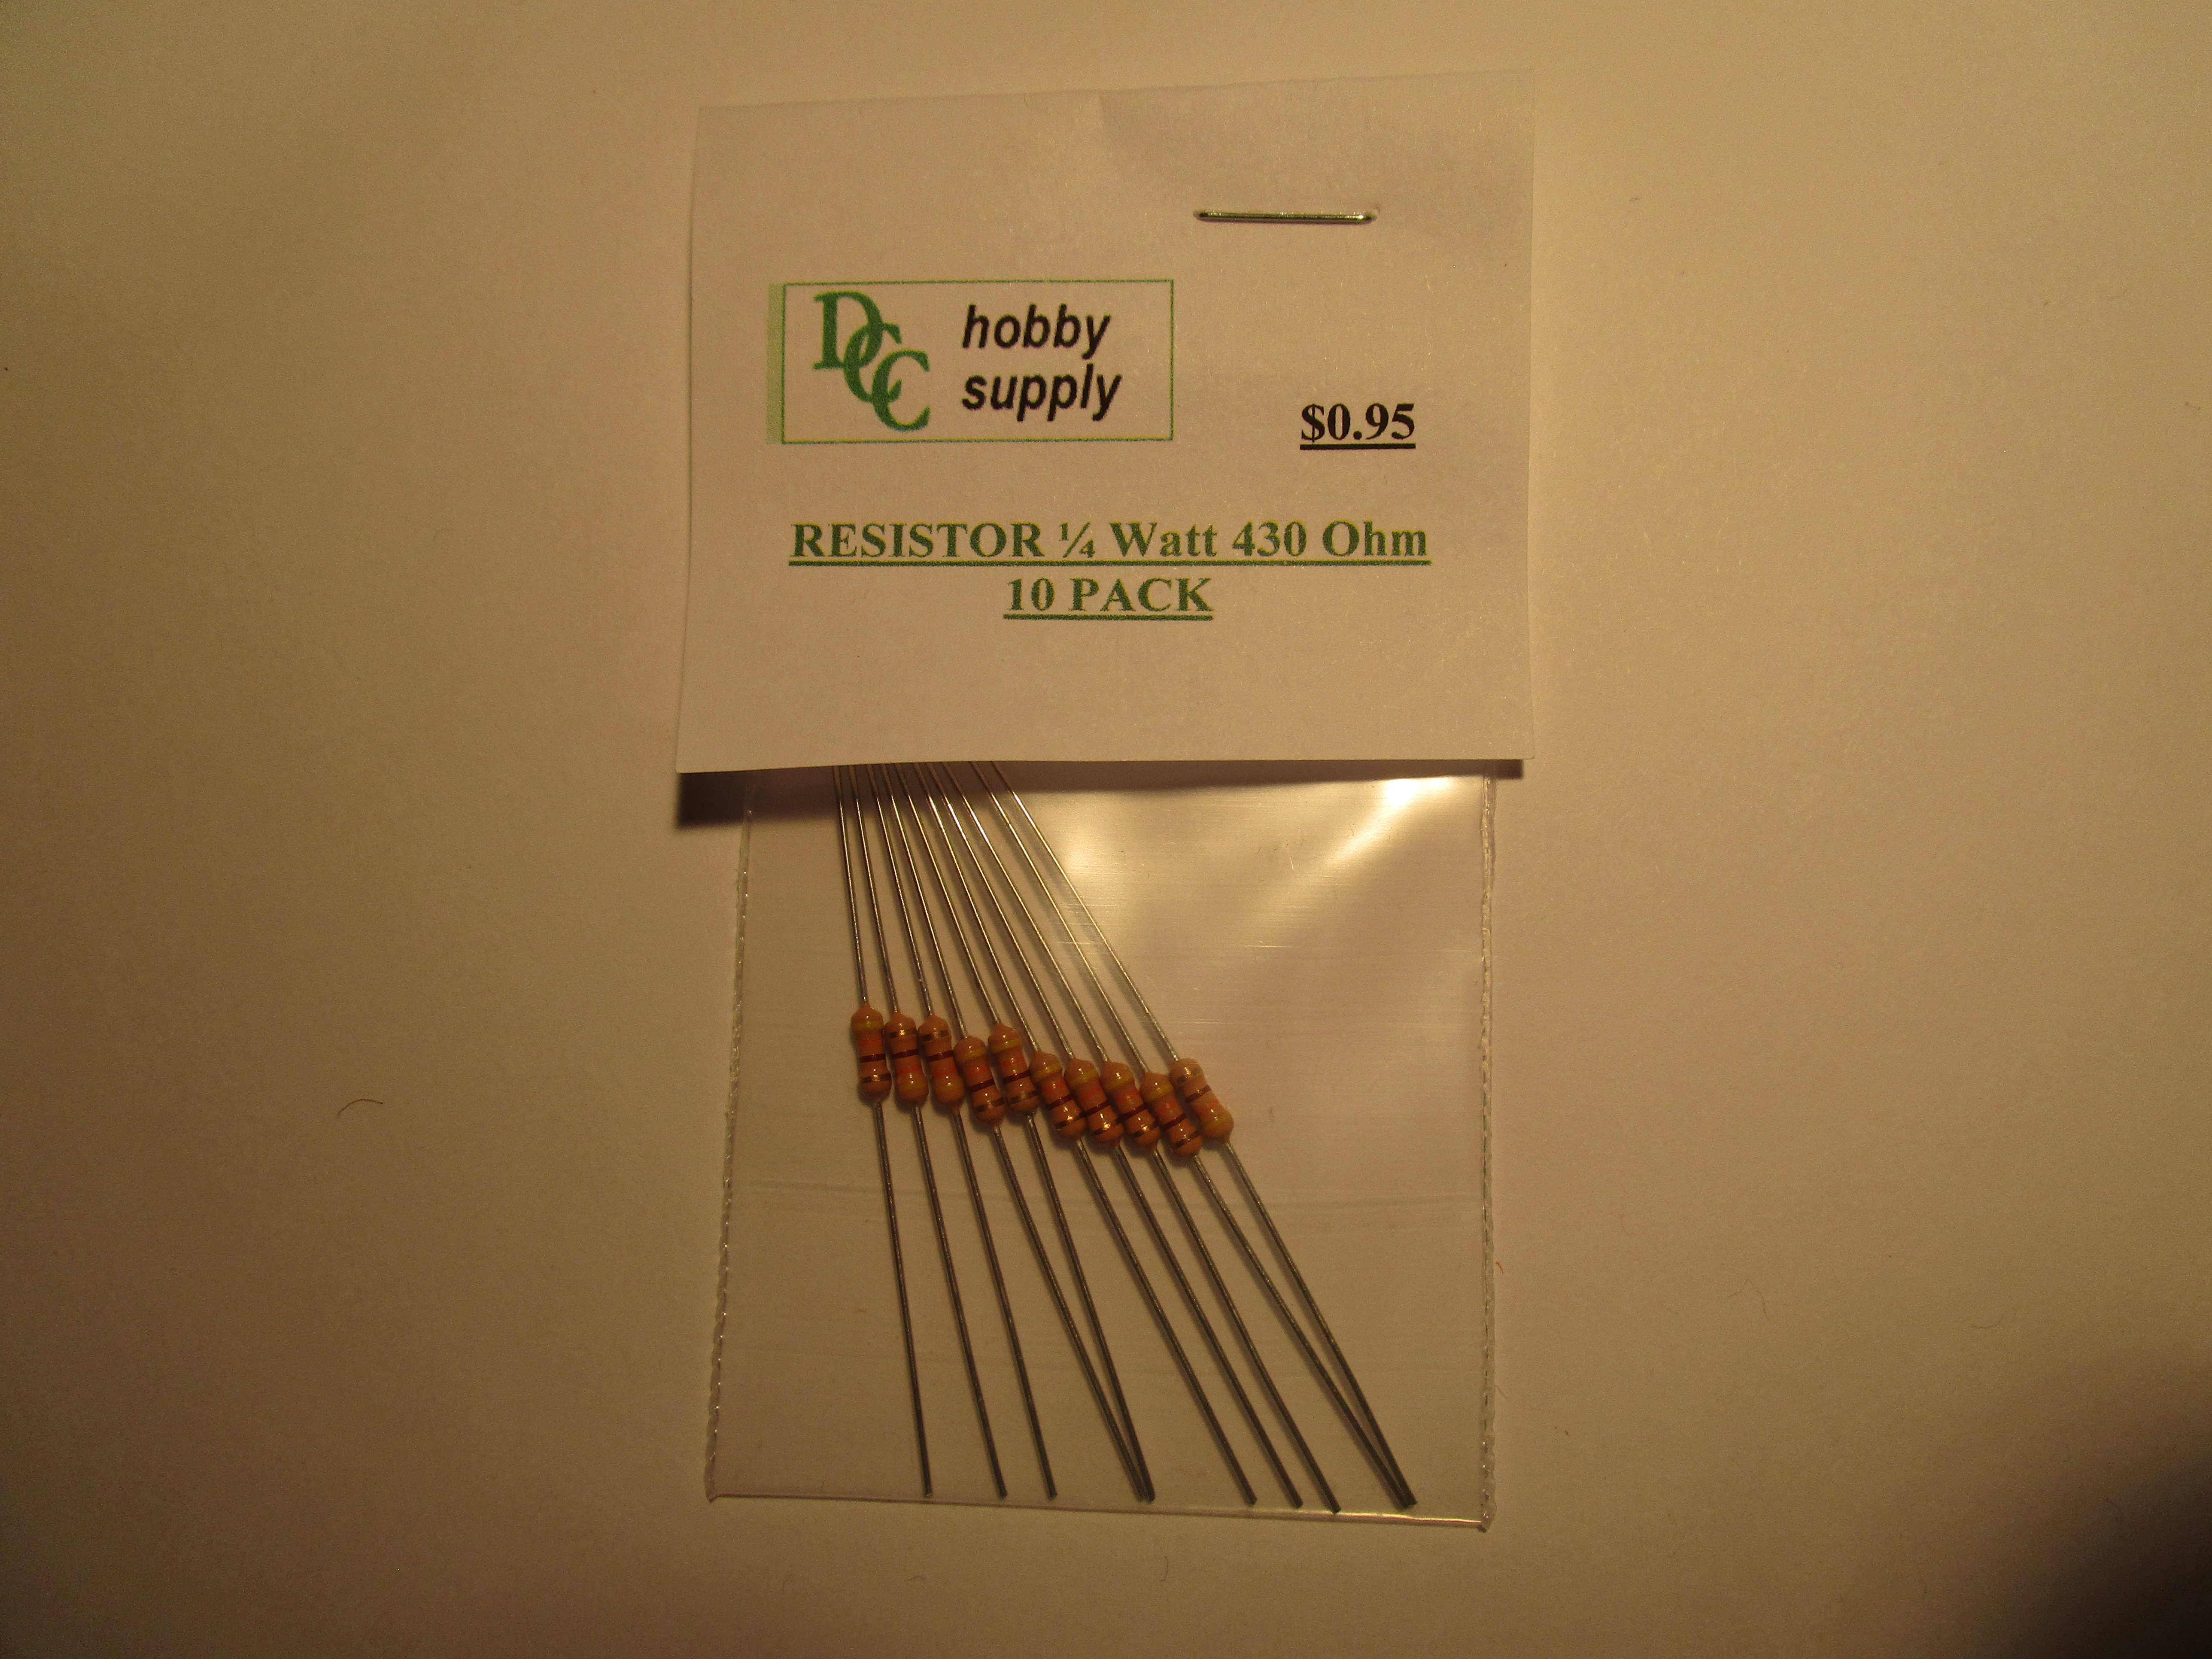 Resistor, 1/4 watt 430 Ohm (10 pack)